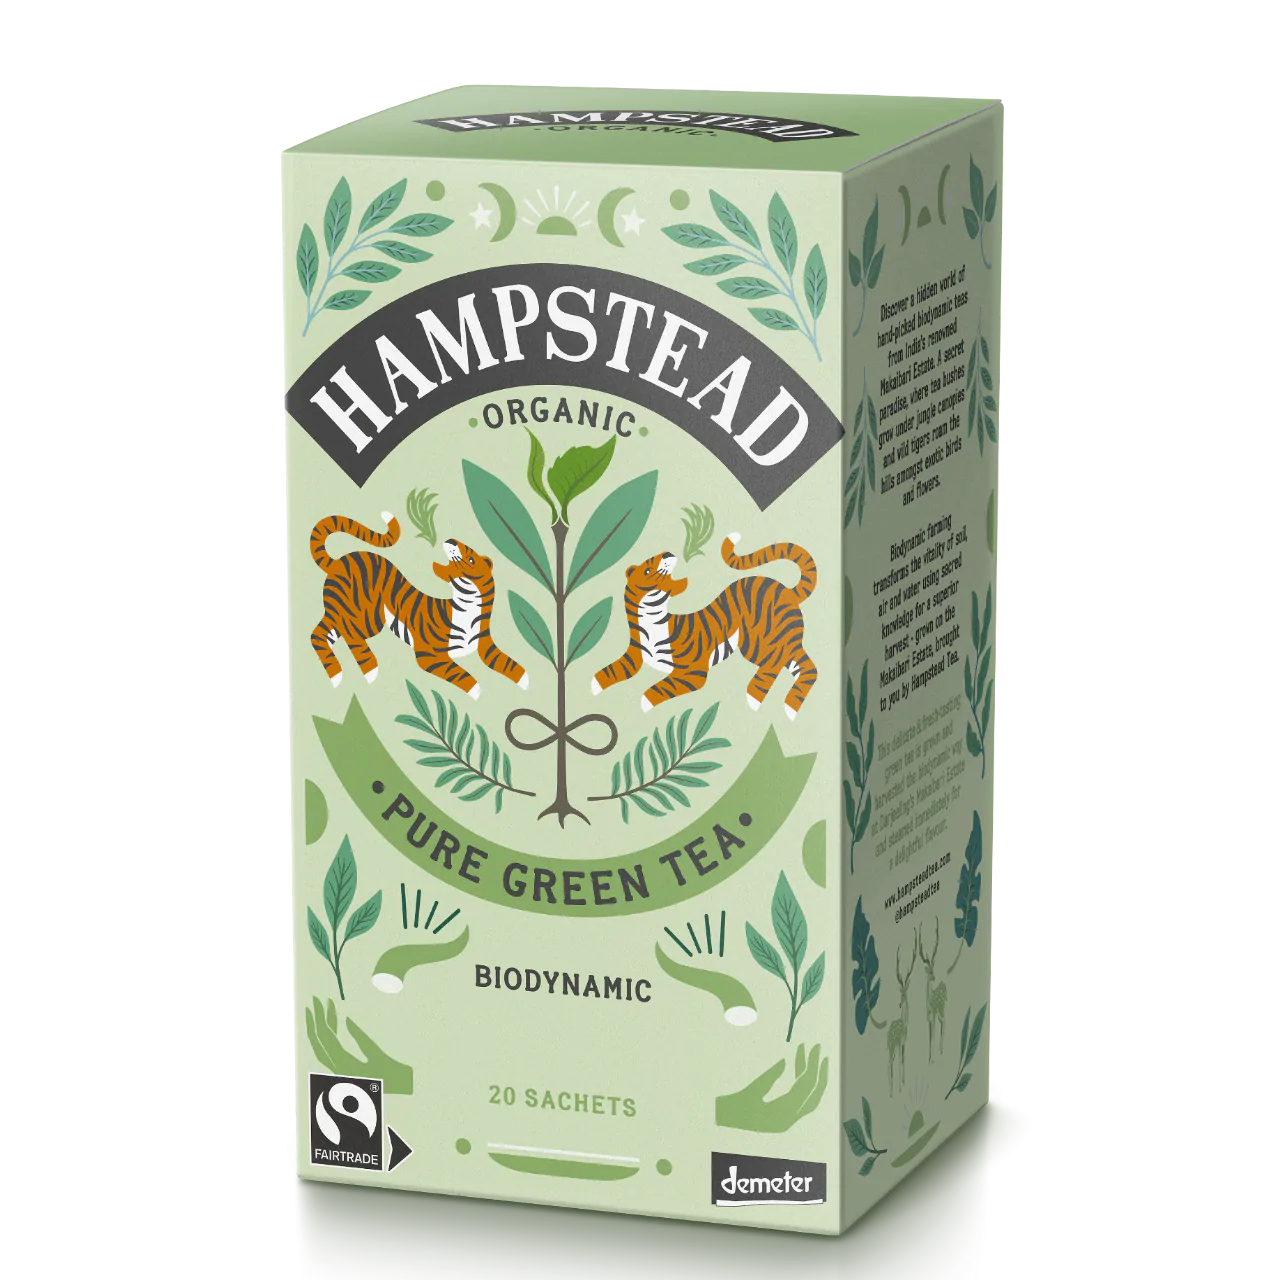 Hampstead Organic Fairtrade Green Tea